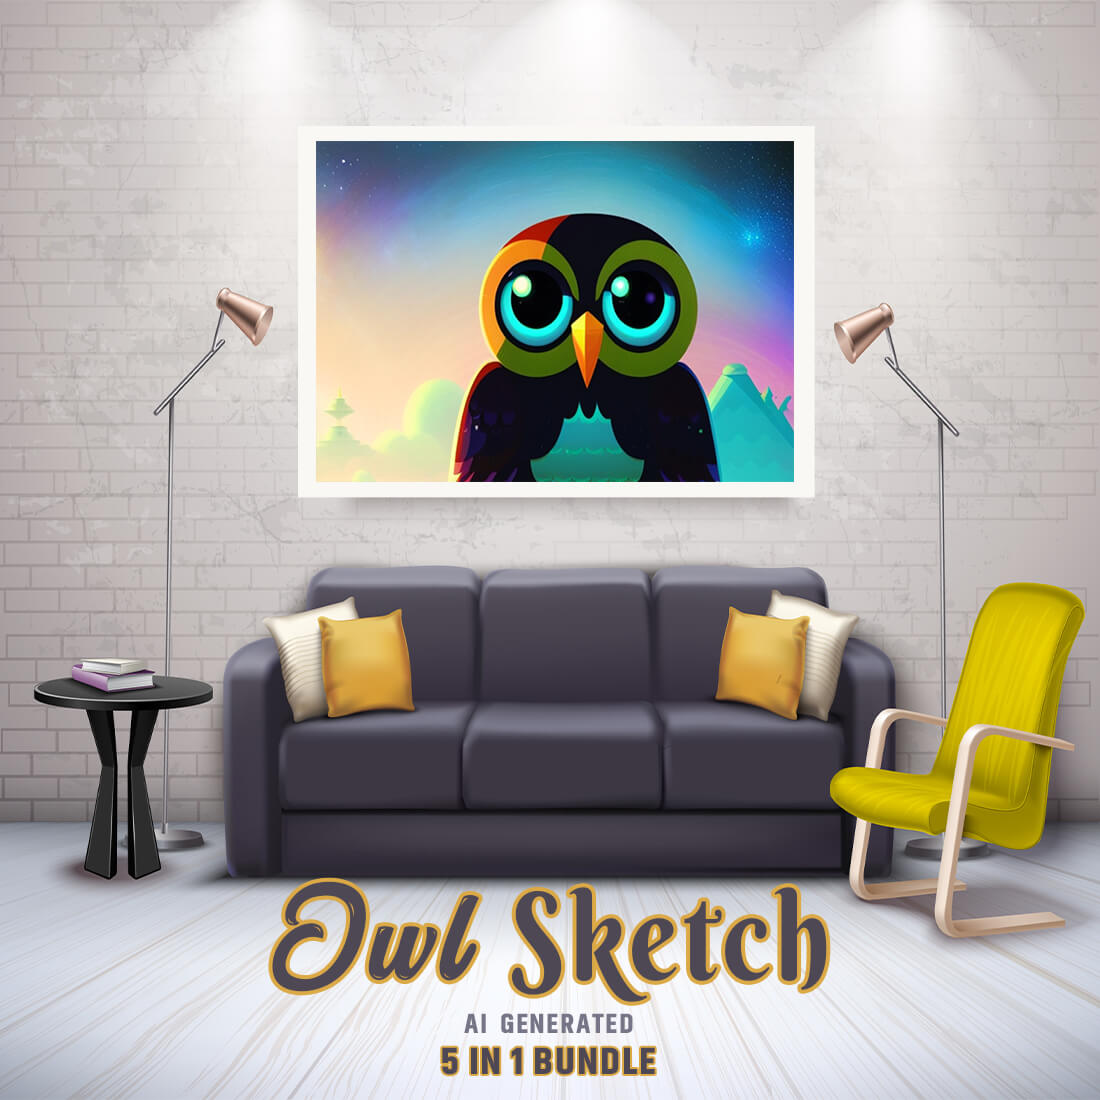 Free Creative & Cute Owl Watercolor Painting Art Vol 02 cover image.